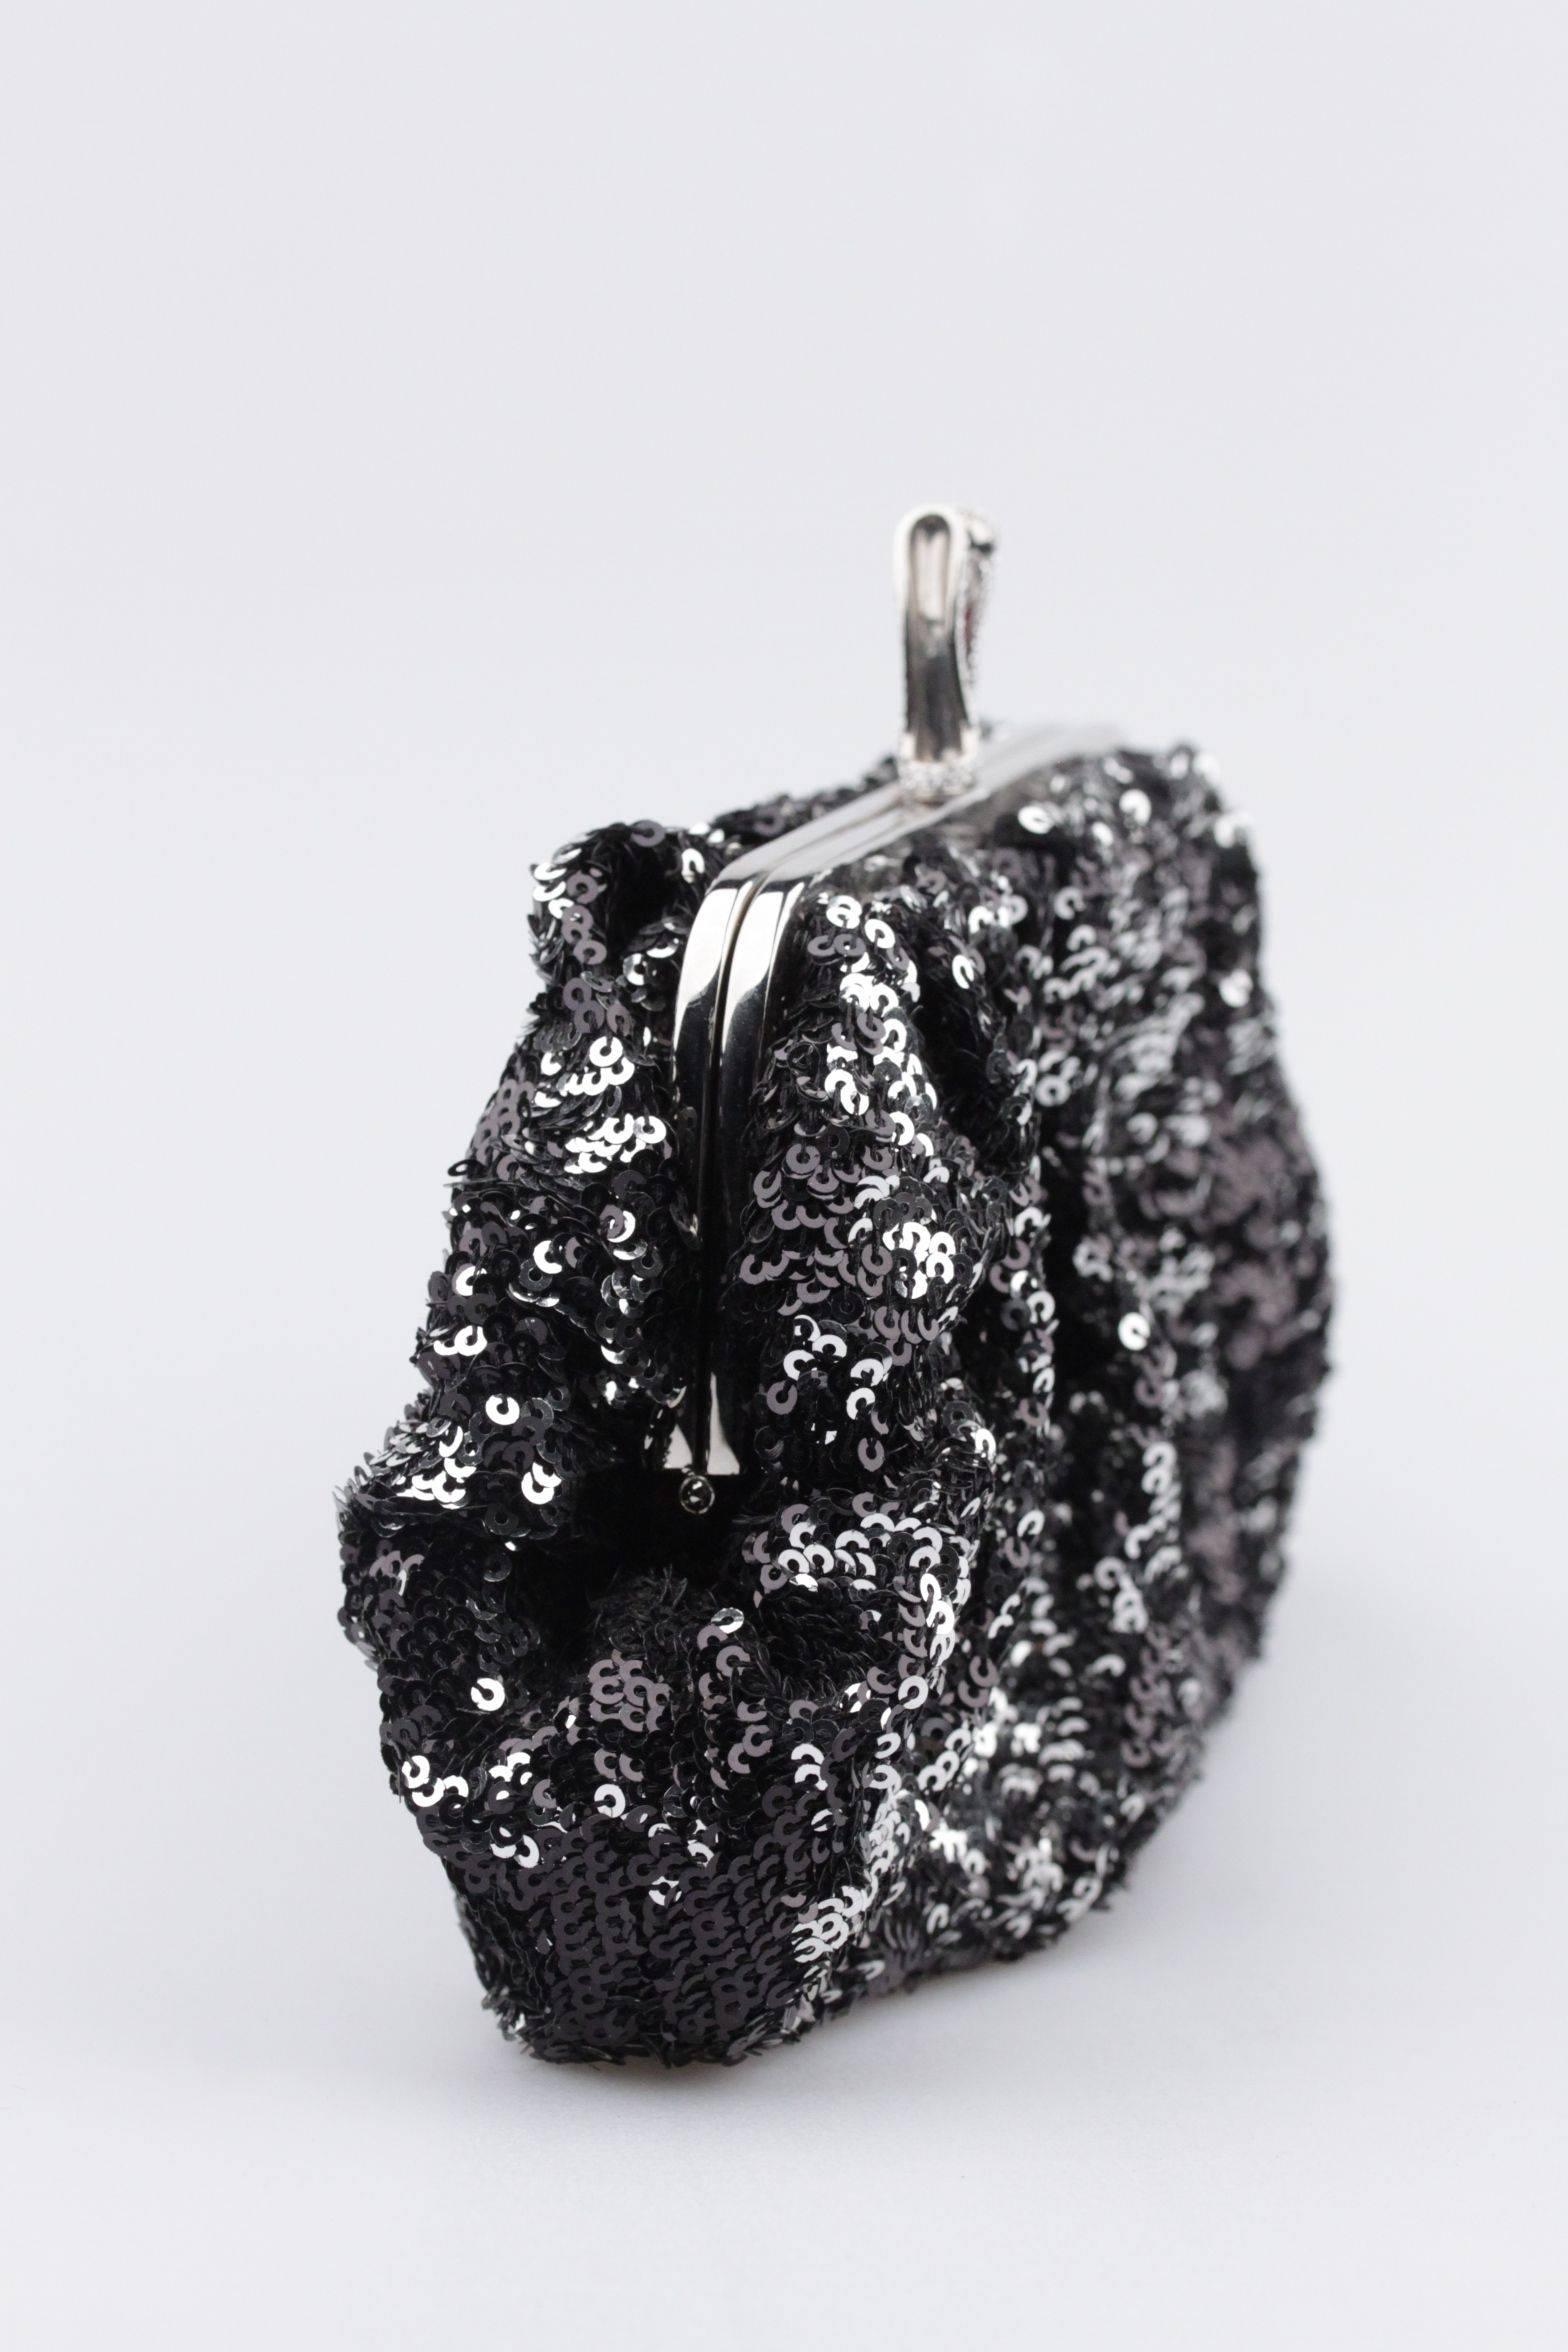 Black CHRISTIAN LOUBOUTIN Silver Sequined MINI LOUBI LULA Bag CLUTCH Handbag